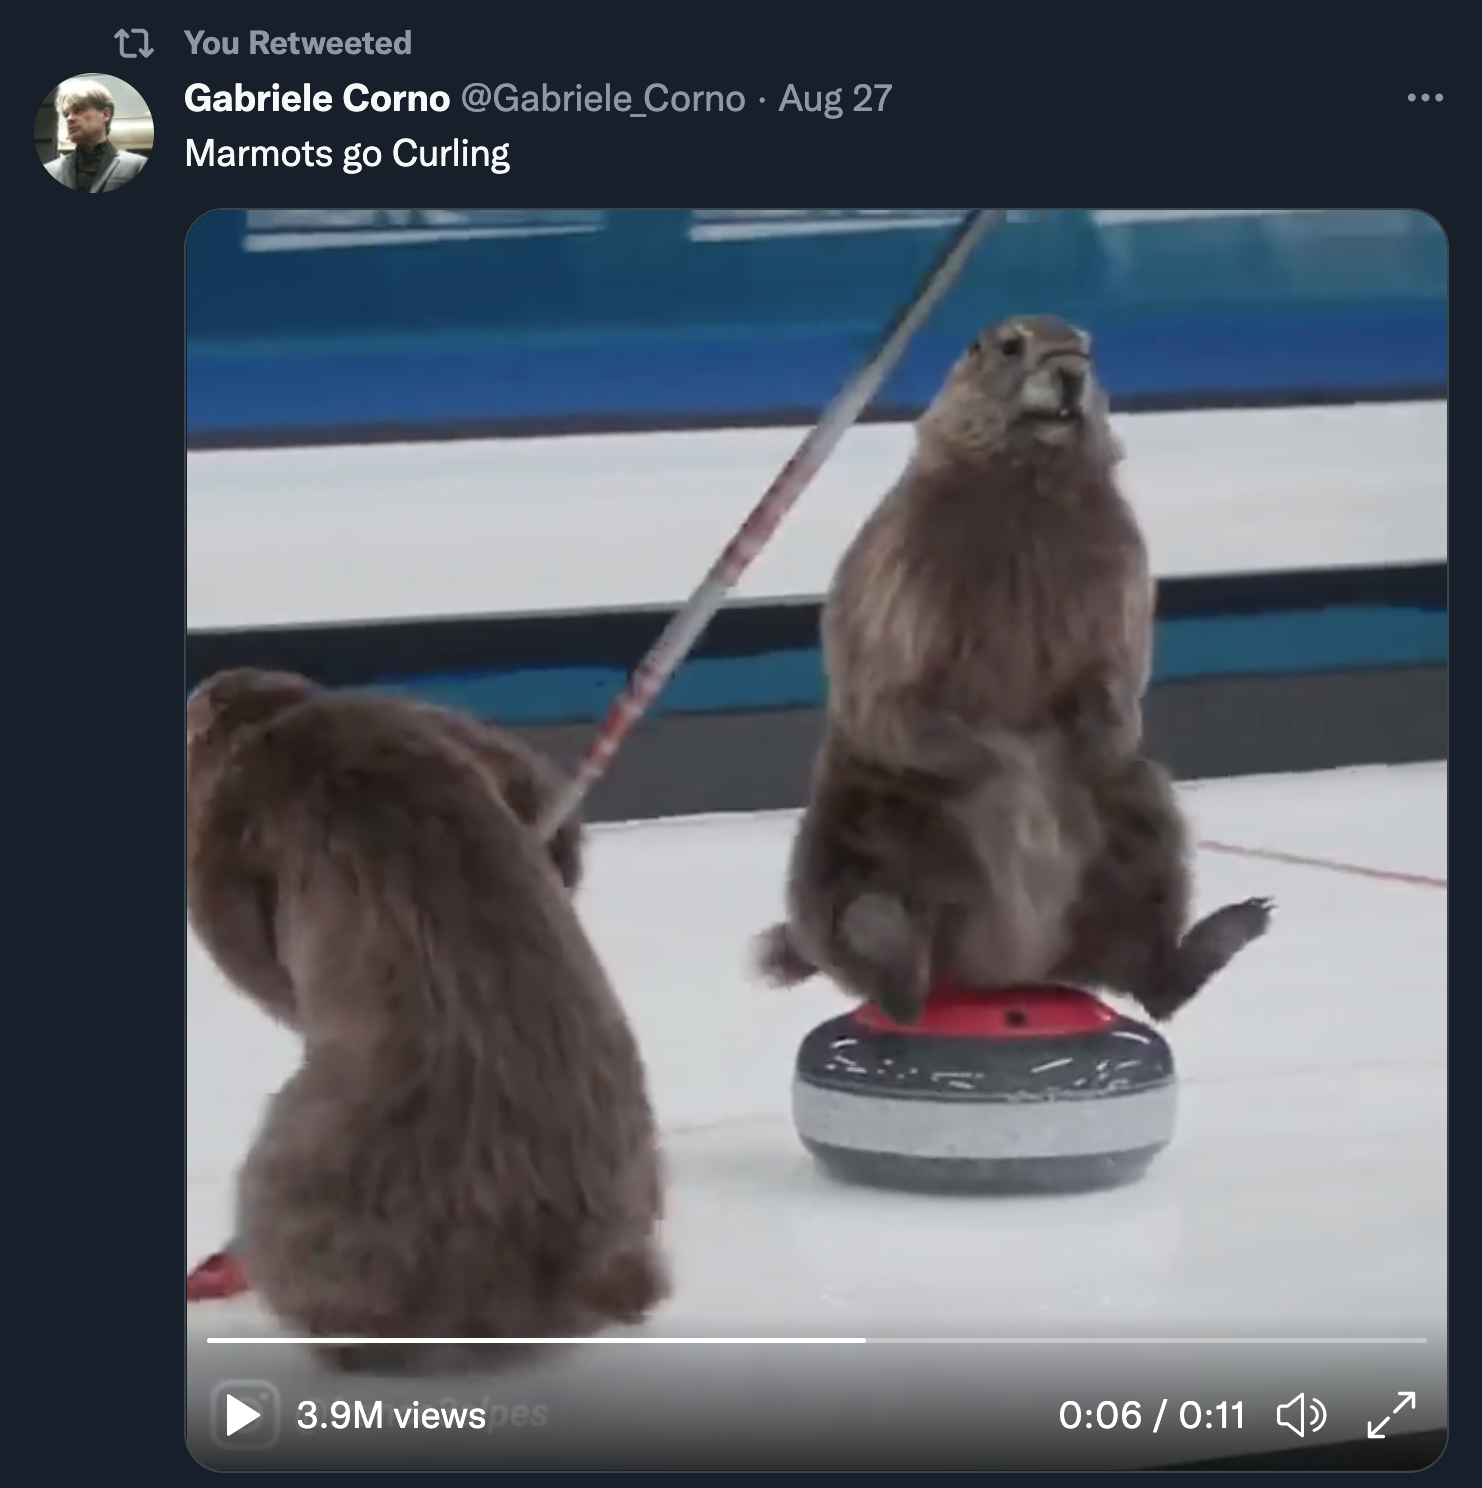 Tweet: Marmots go curling